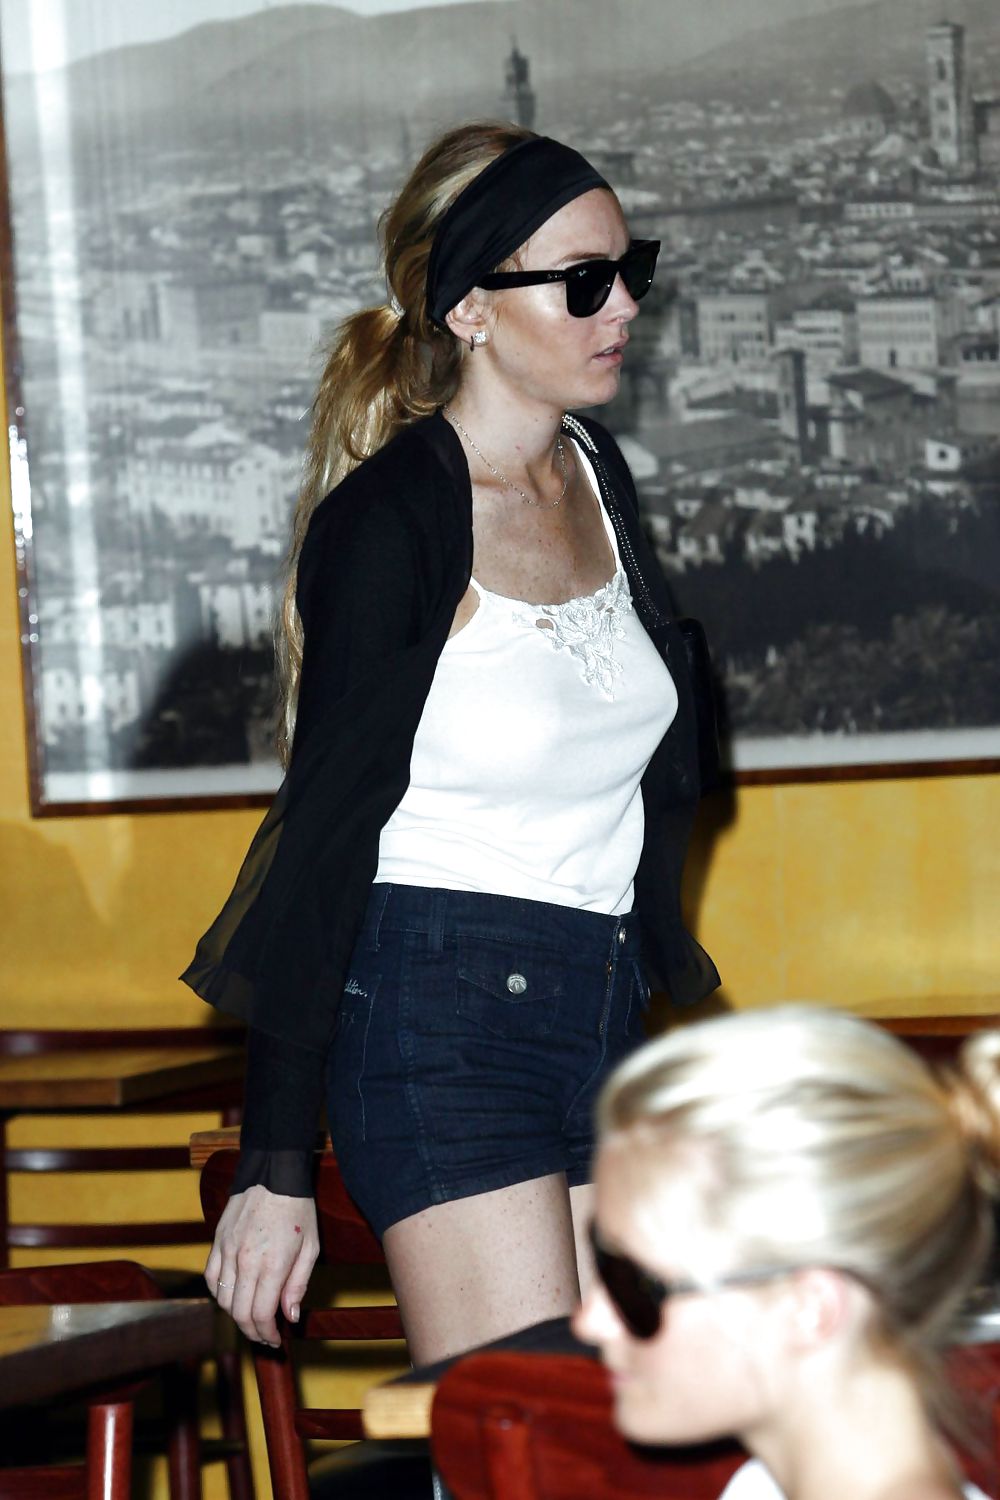 Lindsay Lohan is leggy smoking a cigarette in denim shorts